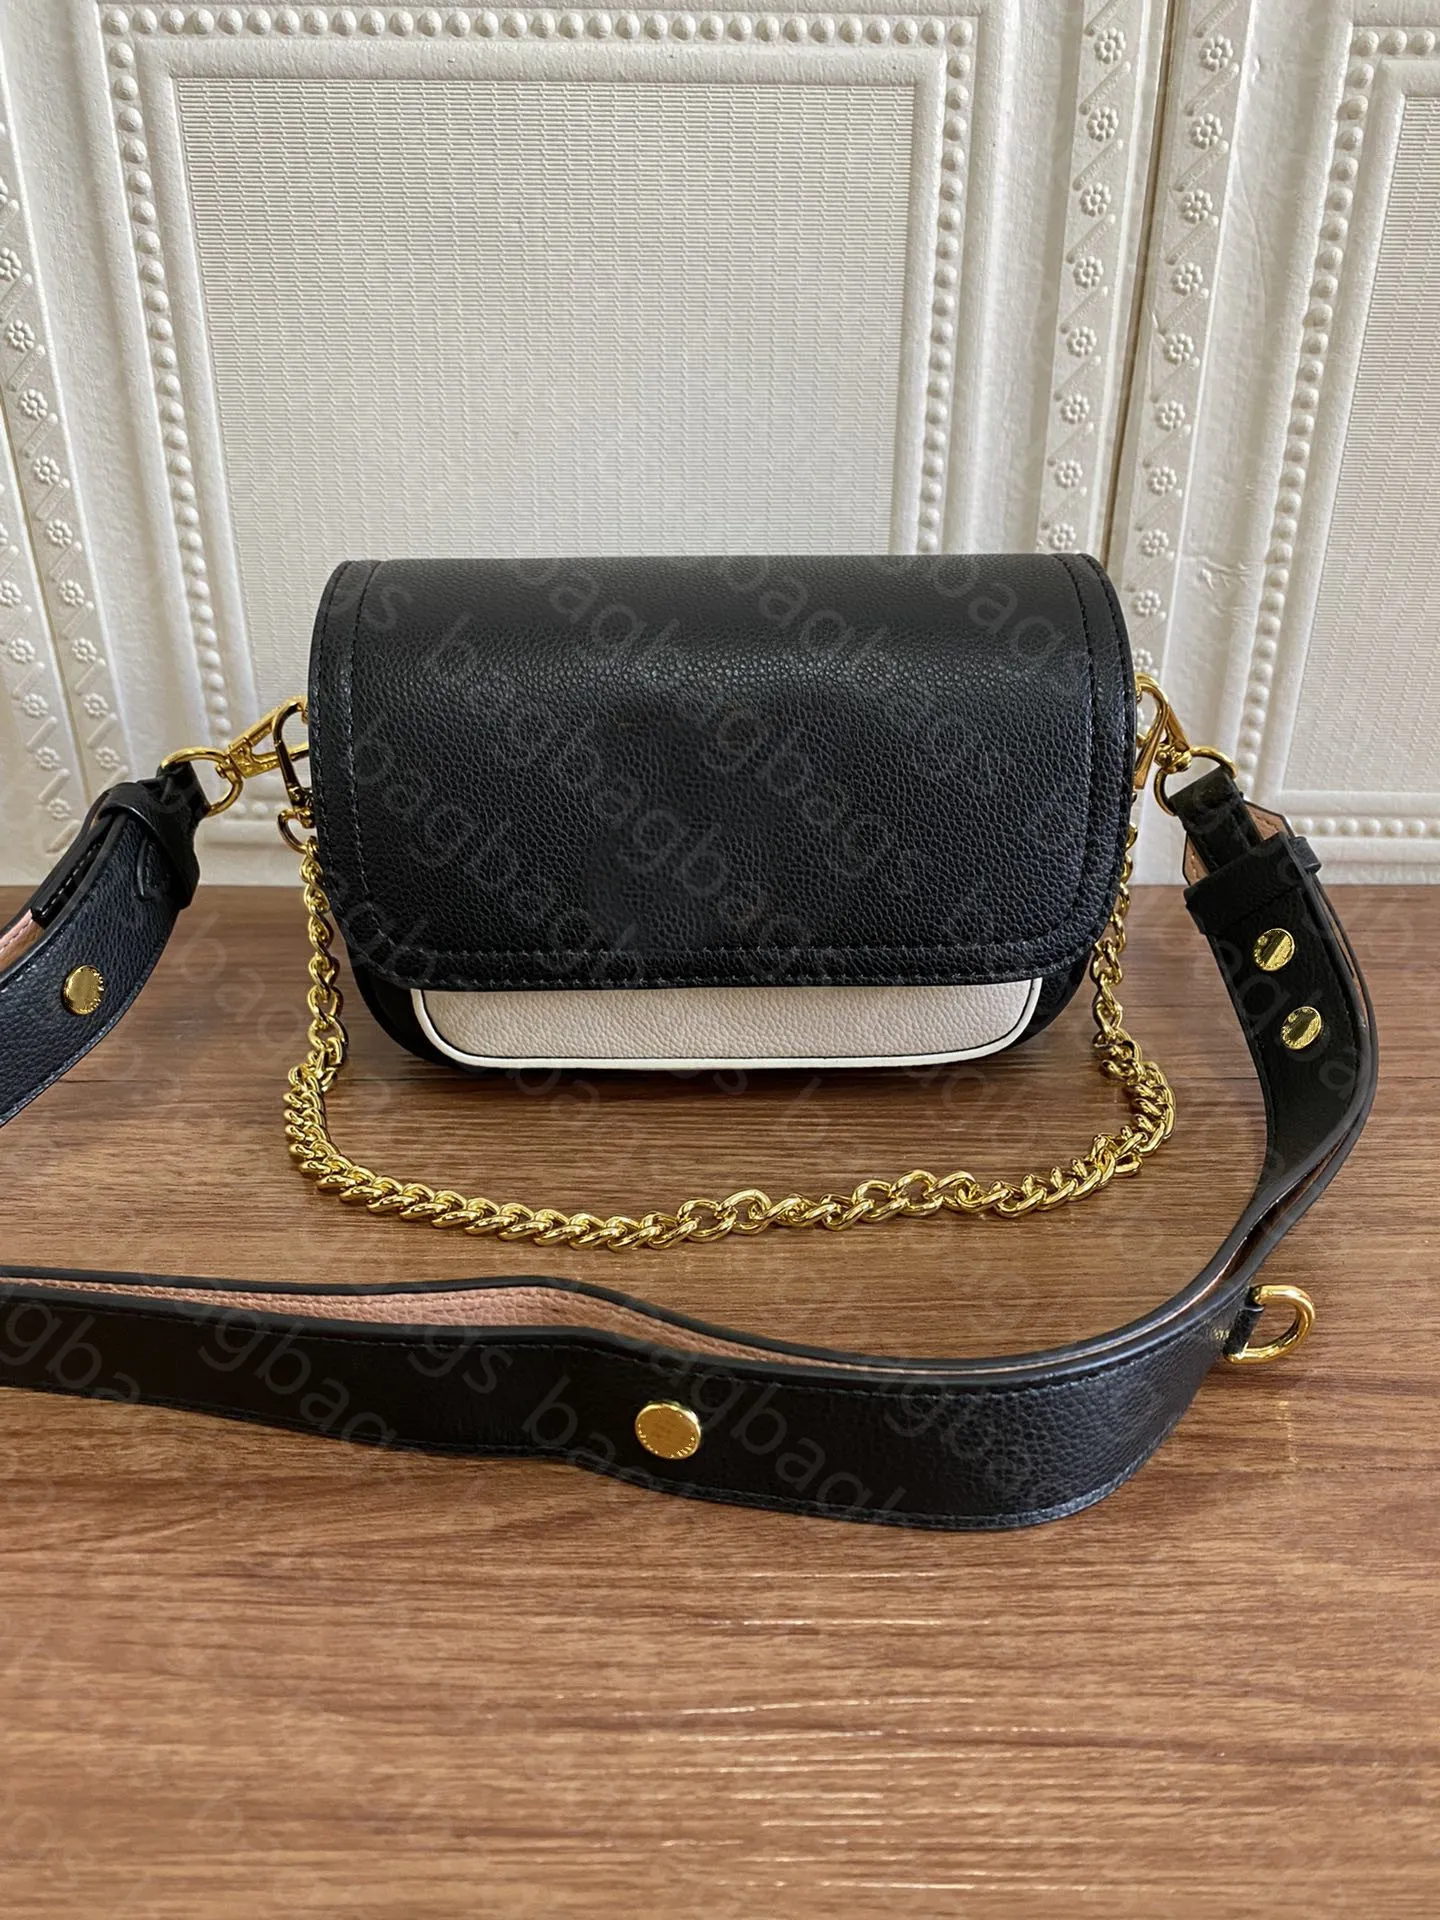 2021 famous designer ladies fashion bag handbag metal letter chain two-color cover flap internal zipper pocket casual messenger shoulderbag